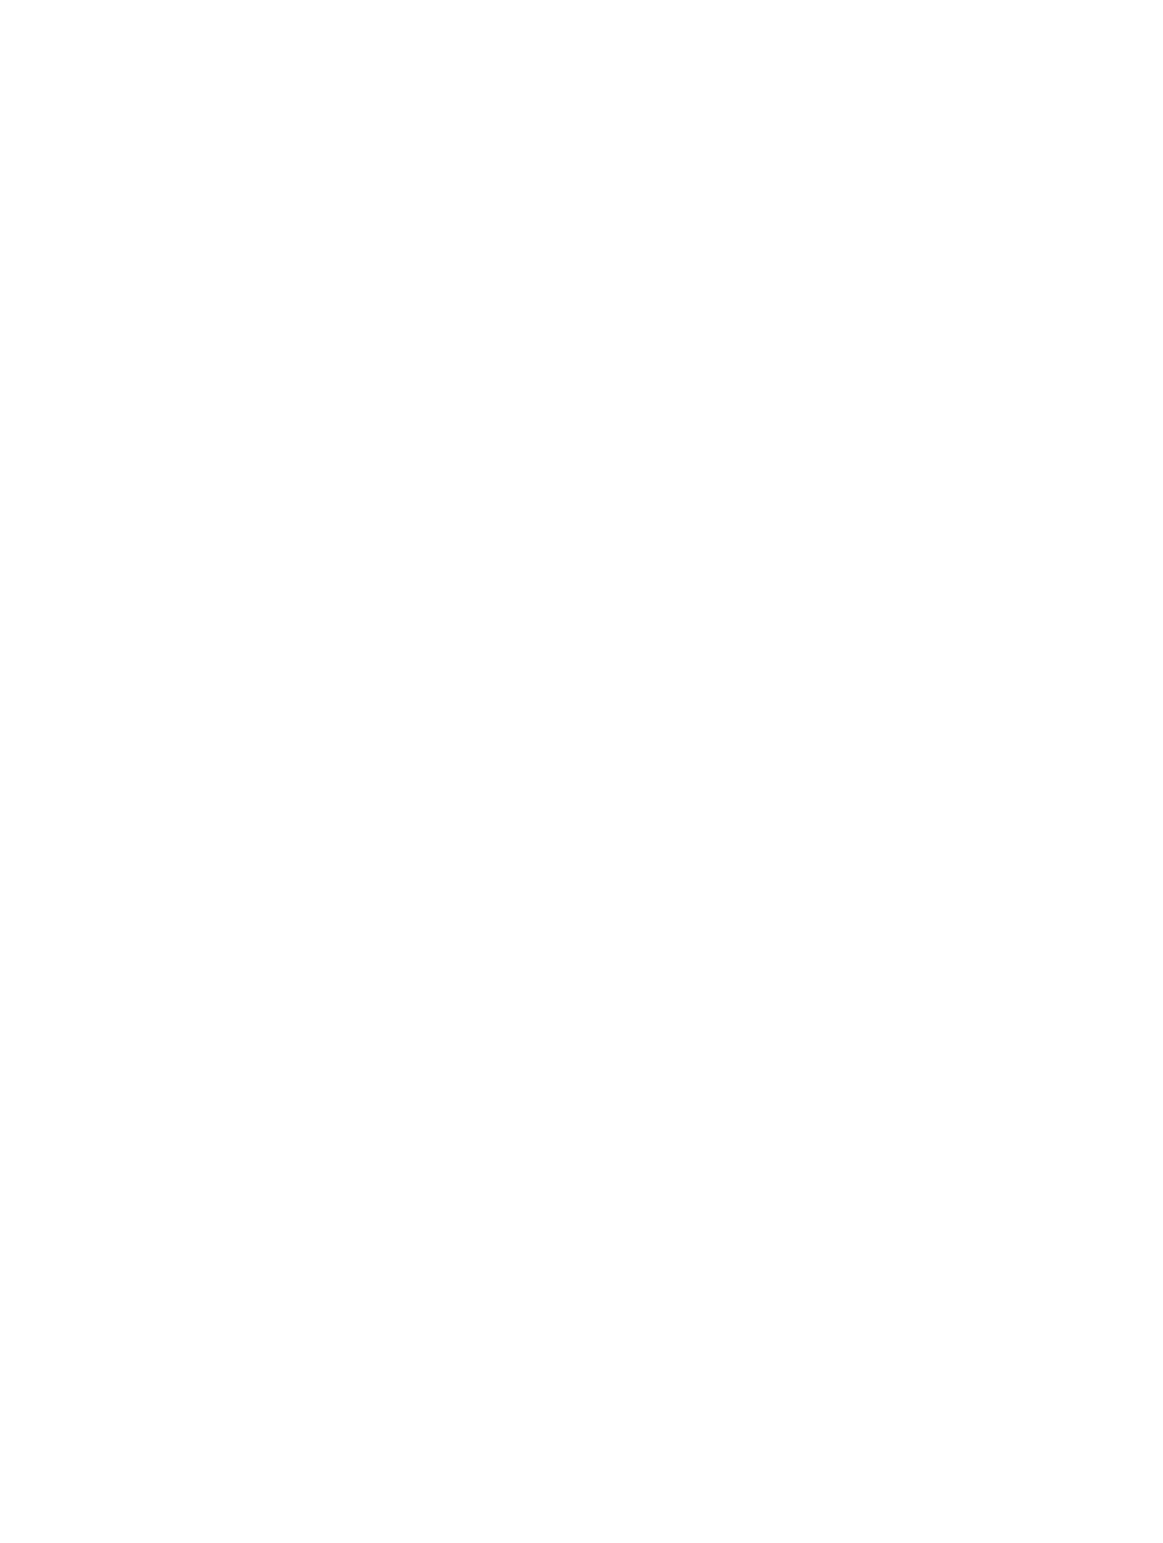 Gambling.com Group logo pour fonds sombres (PNG transparent)